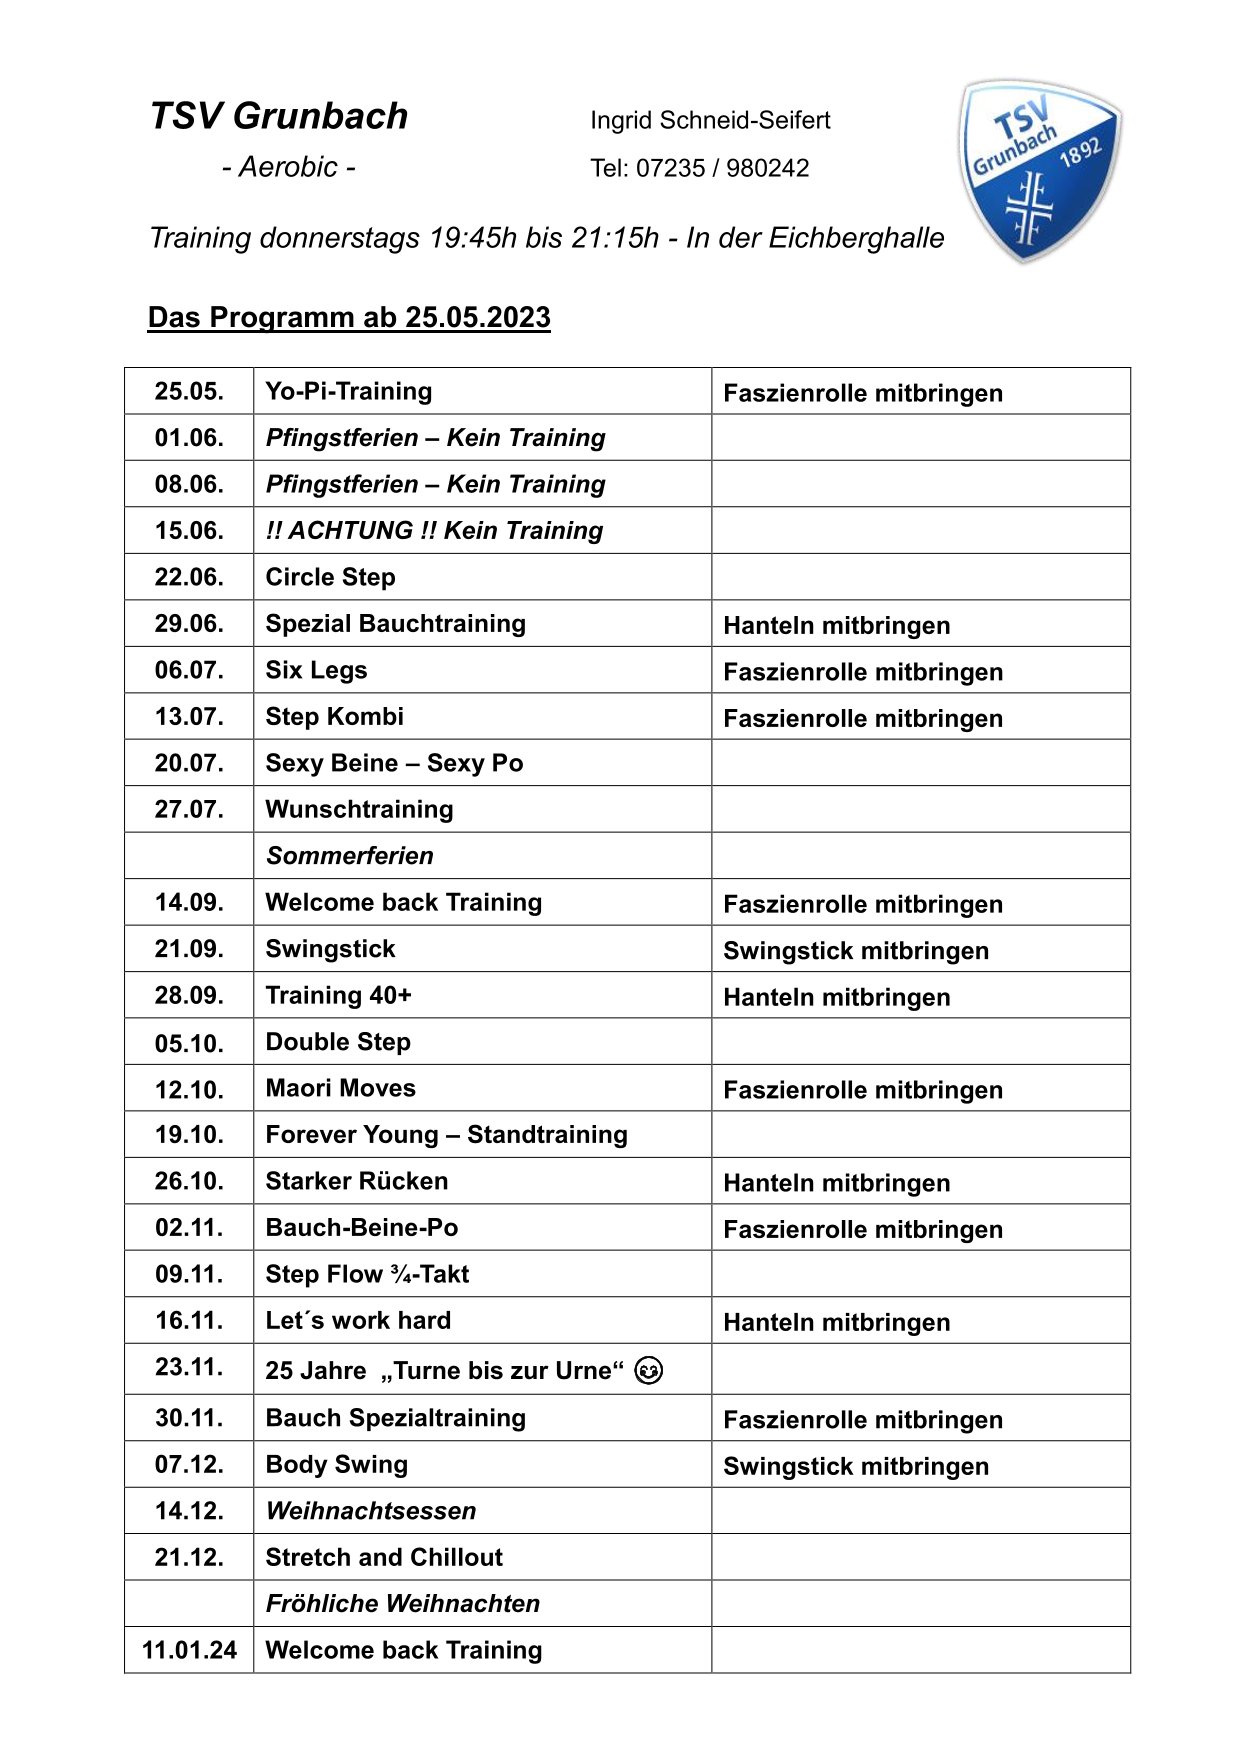 TSV Grunbach Trainingsplan Aerobic 2023 Juni